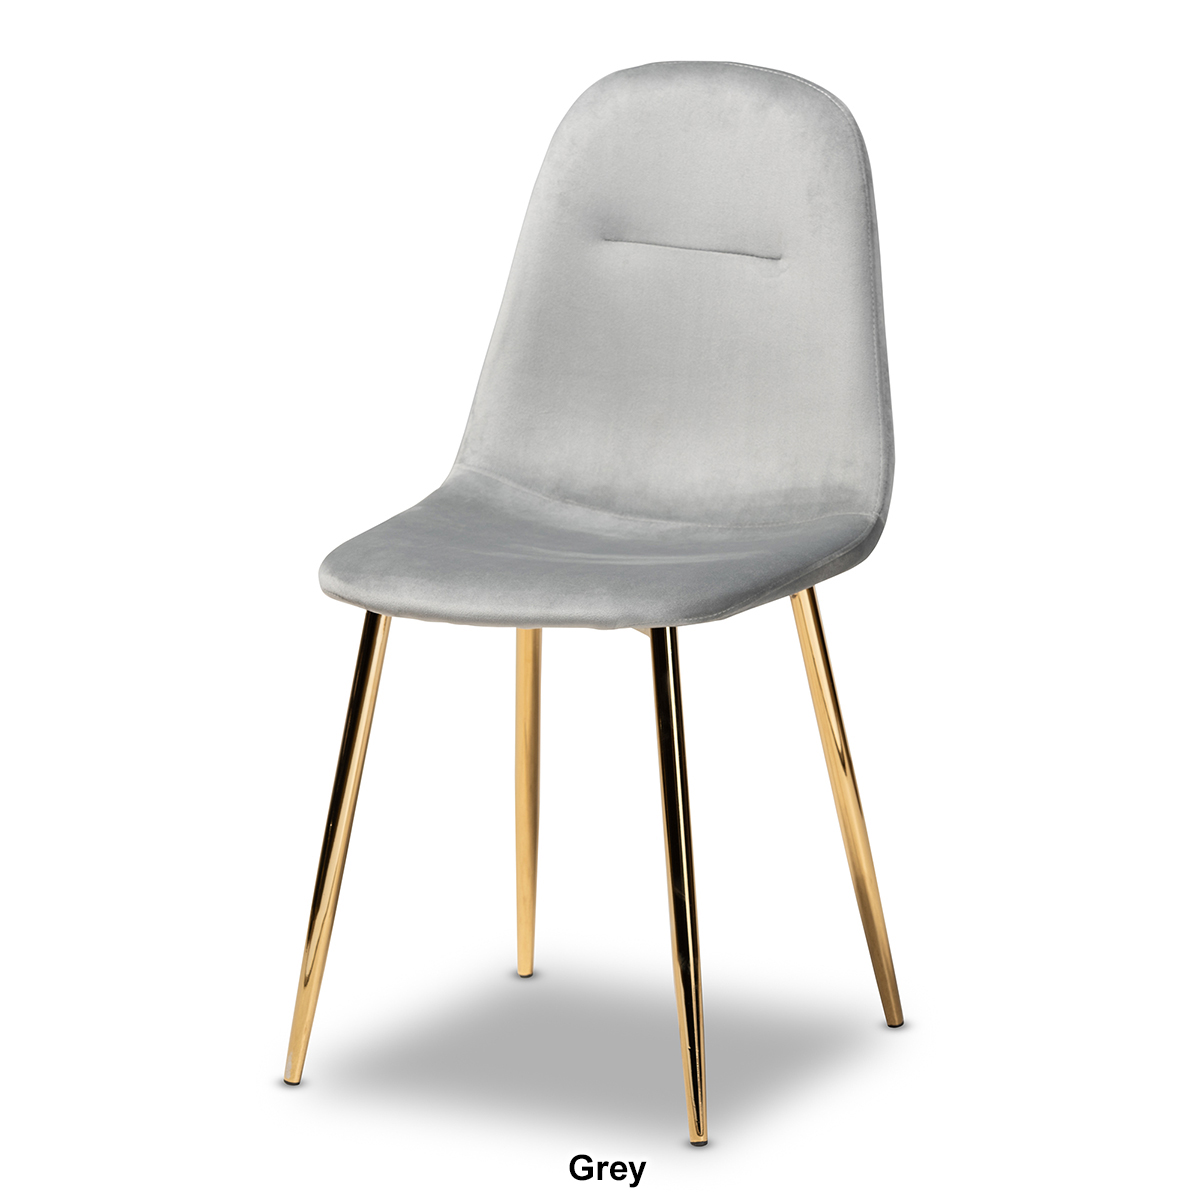 Baxton Studio Elyse Glam 4pc. Metal Dining Chair Set